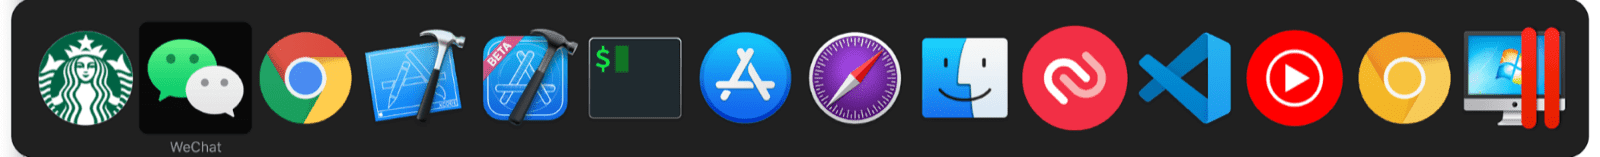 Il selettore multitasking per macOS include mini app insieme alle normali app per macOS.